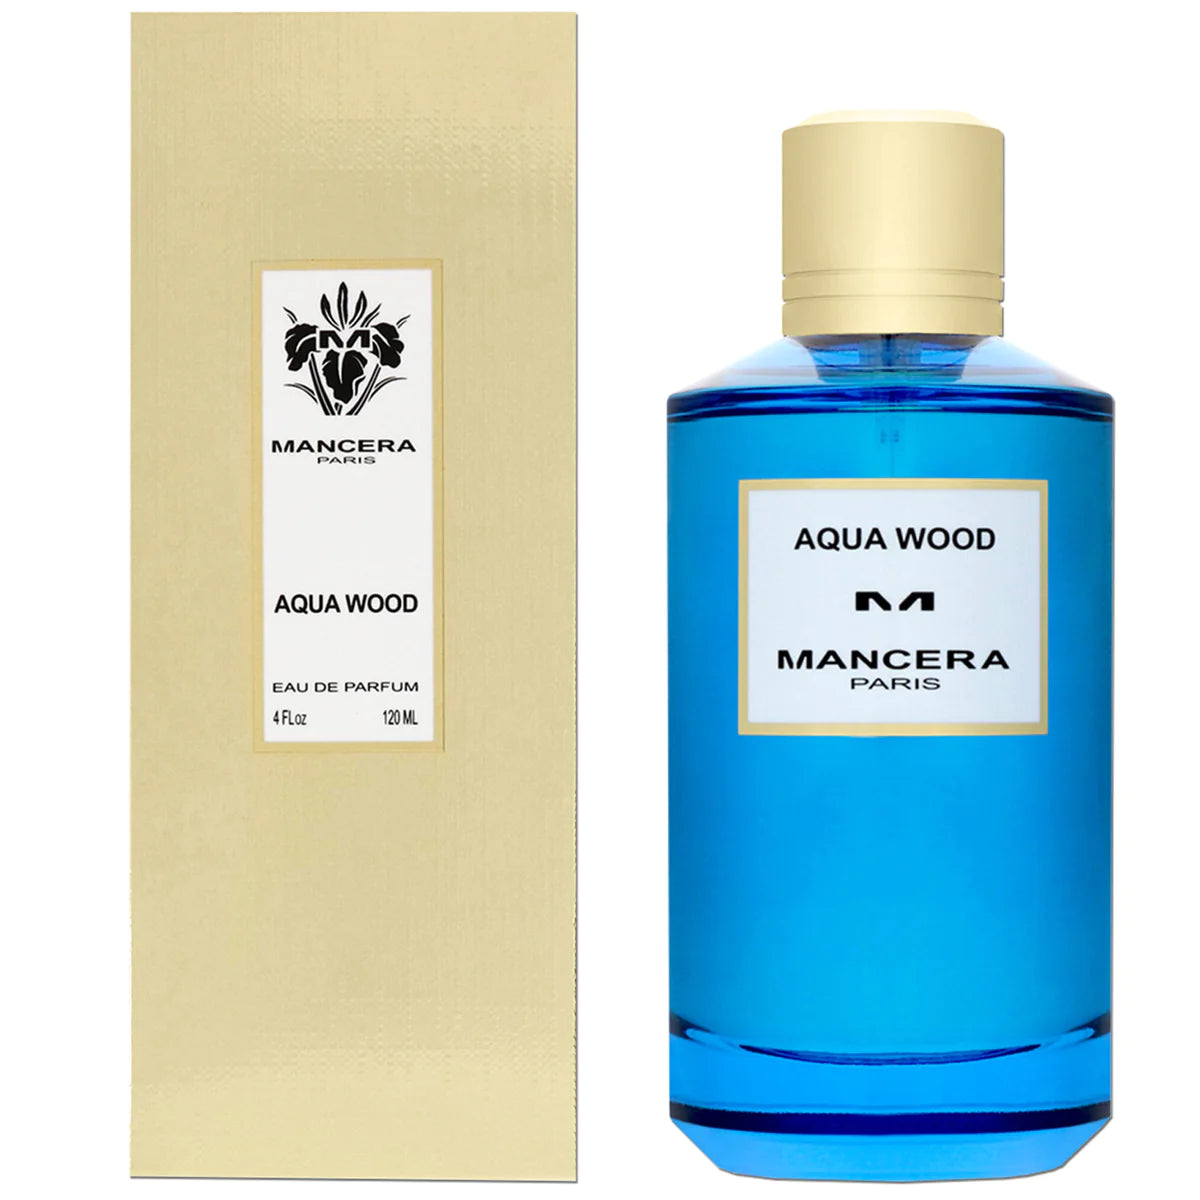 Perfume Mancera Paris Aqua Wood 120ml EDP | CAZANOVA – Cazanovaonline